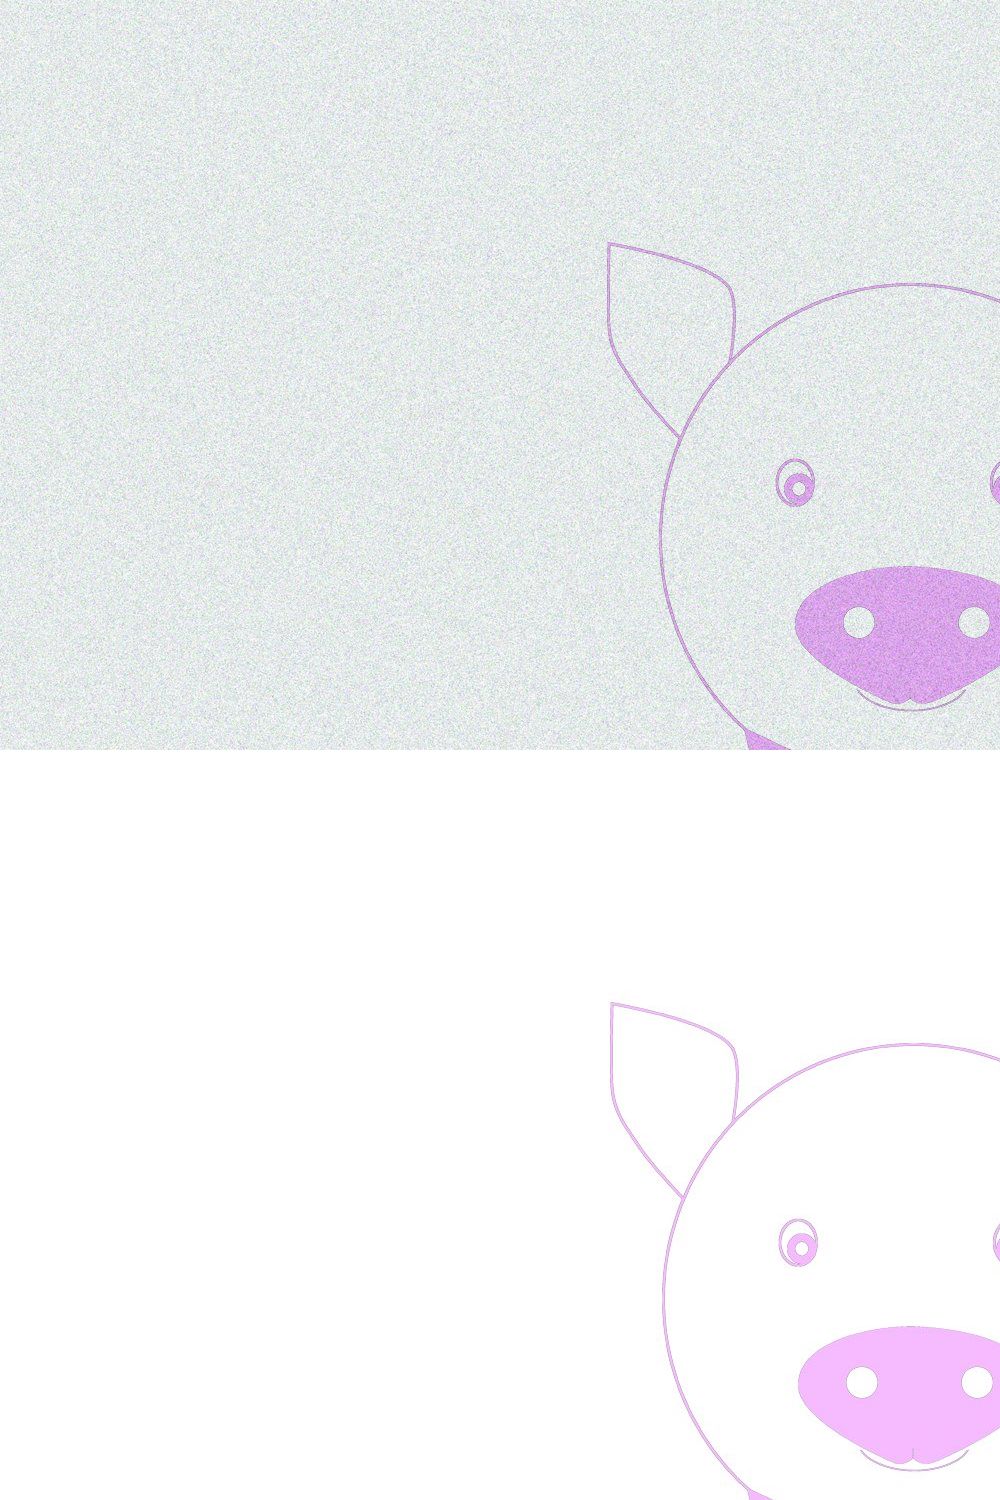 Pork Logo pinterest preview image.